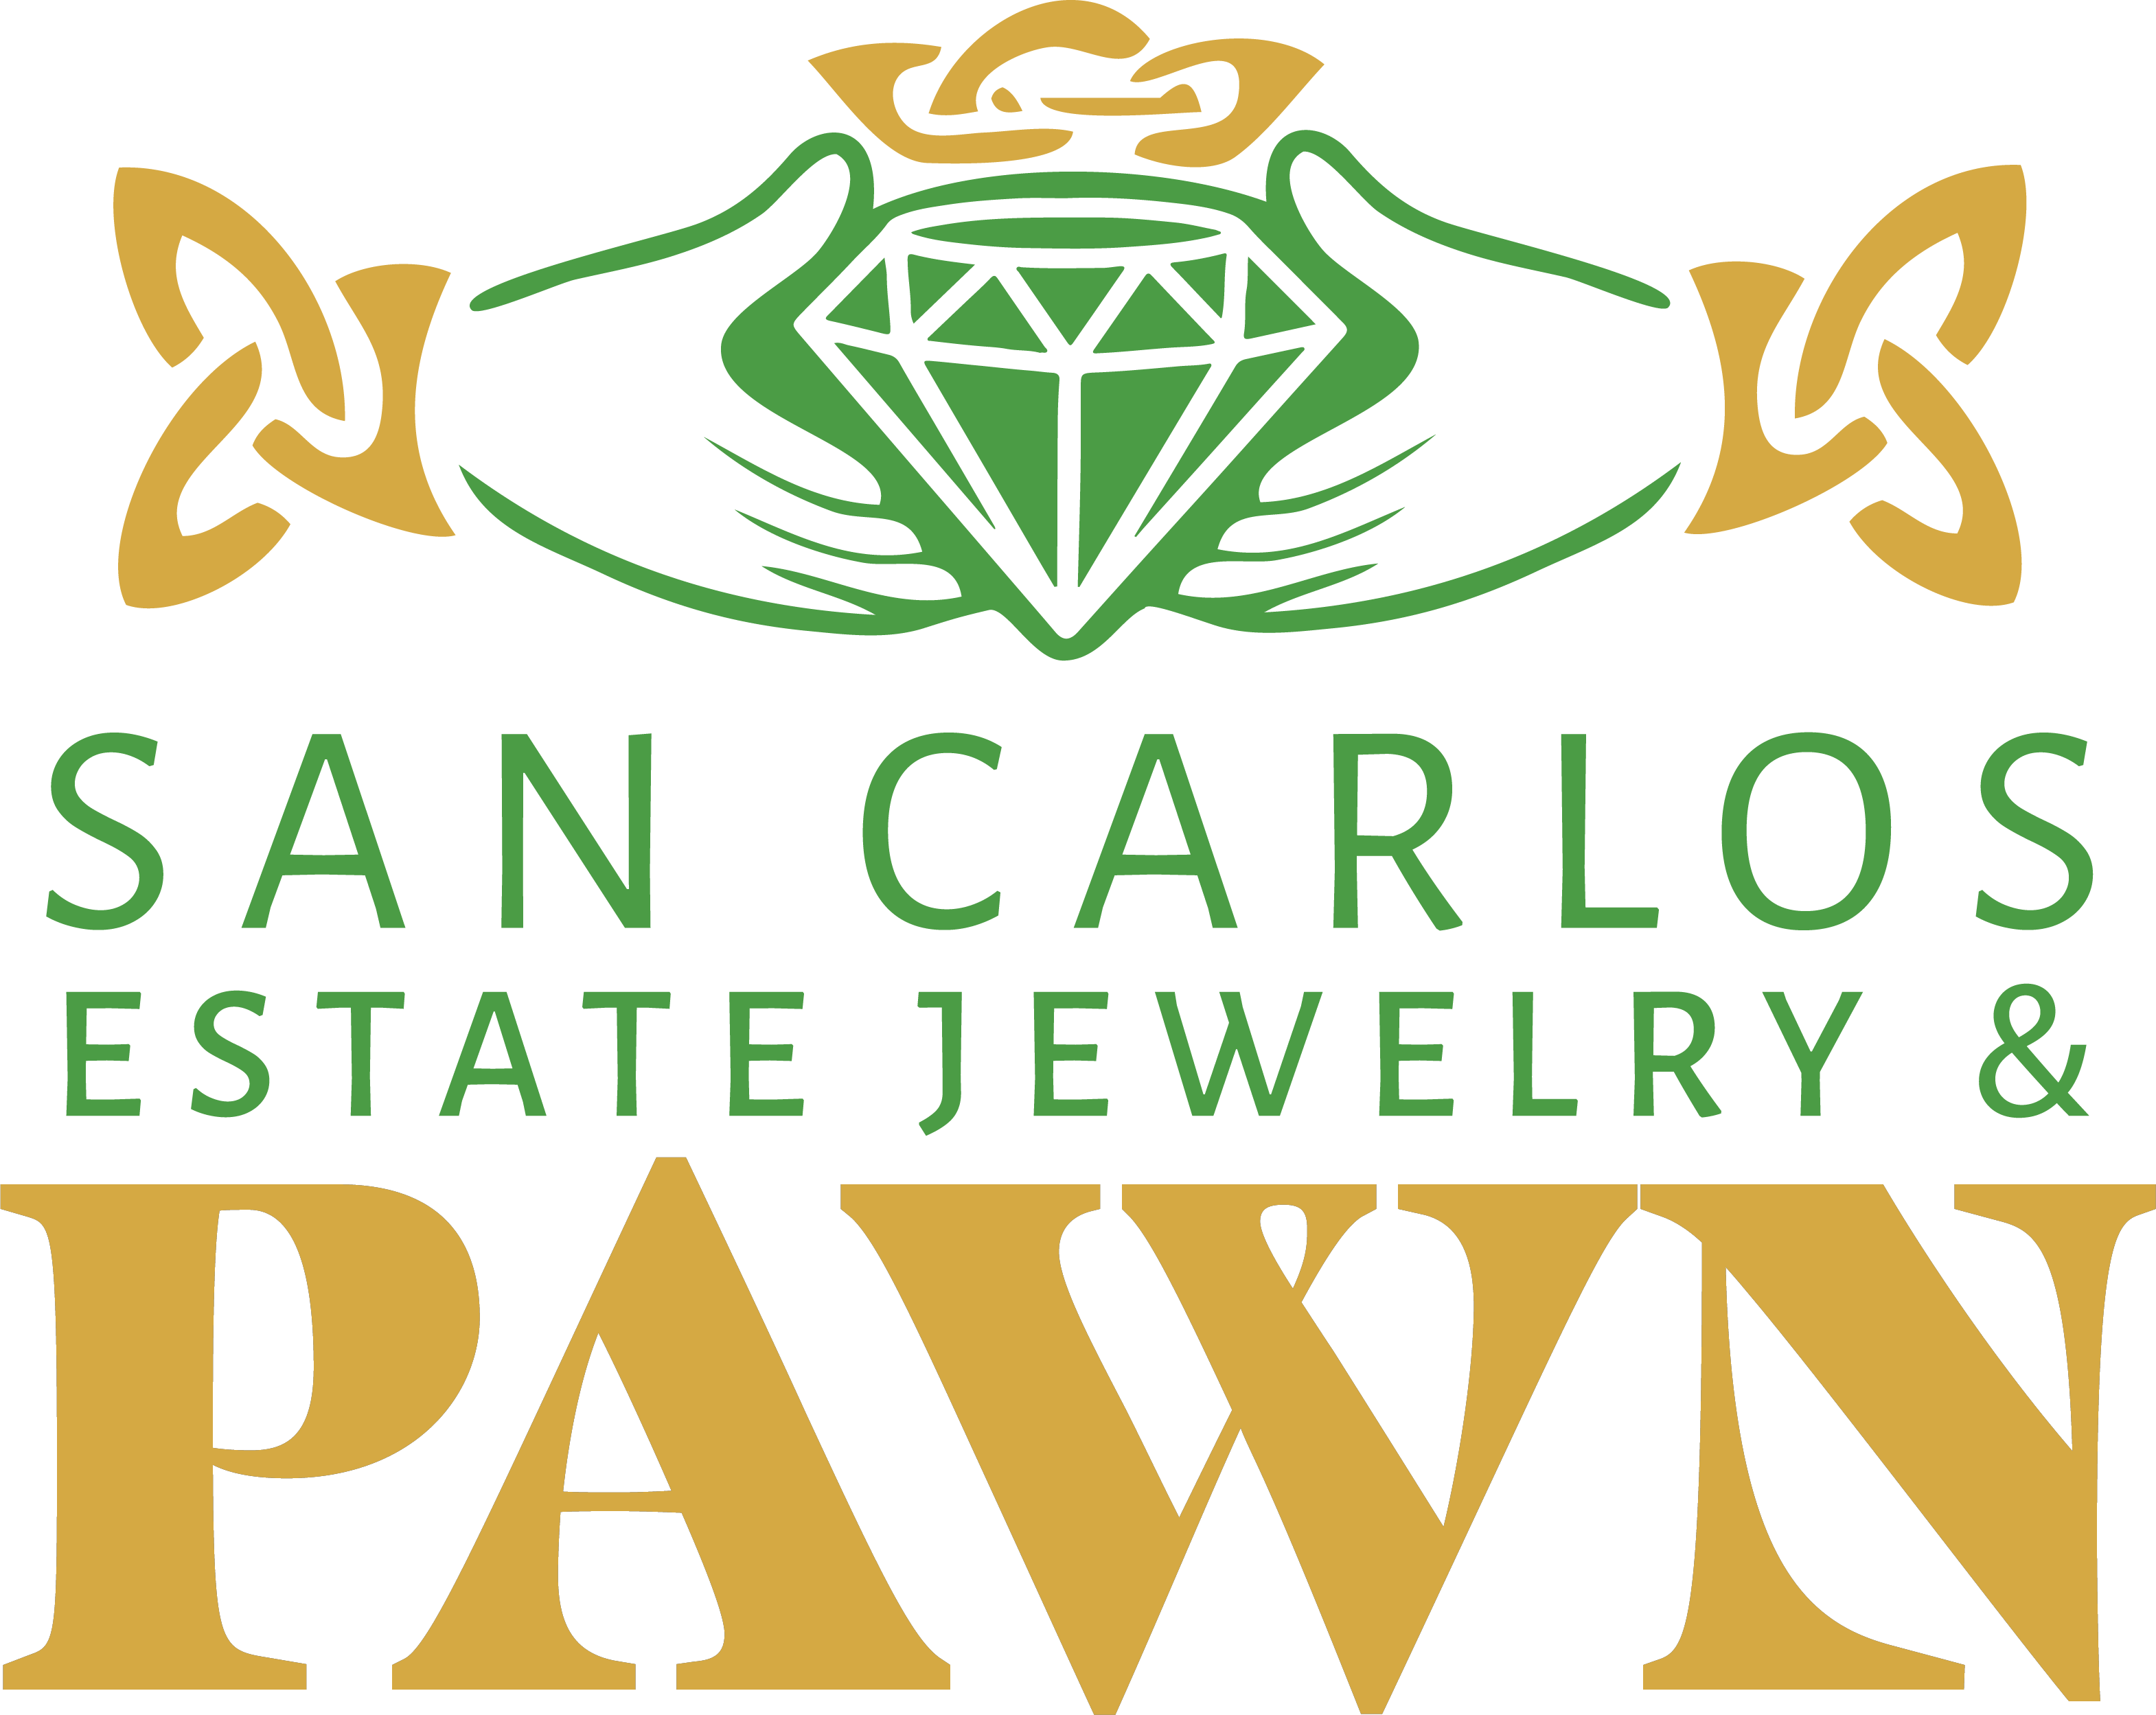 San Carlos Estate Jewelry & Pawn Shop